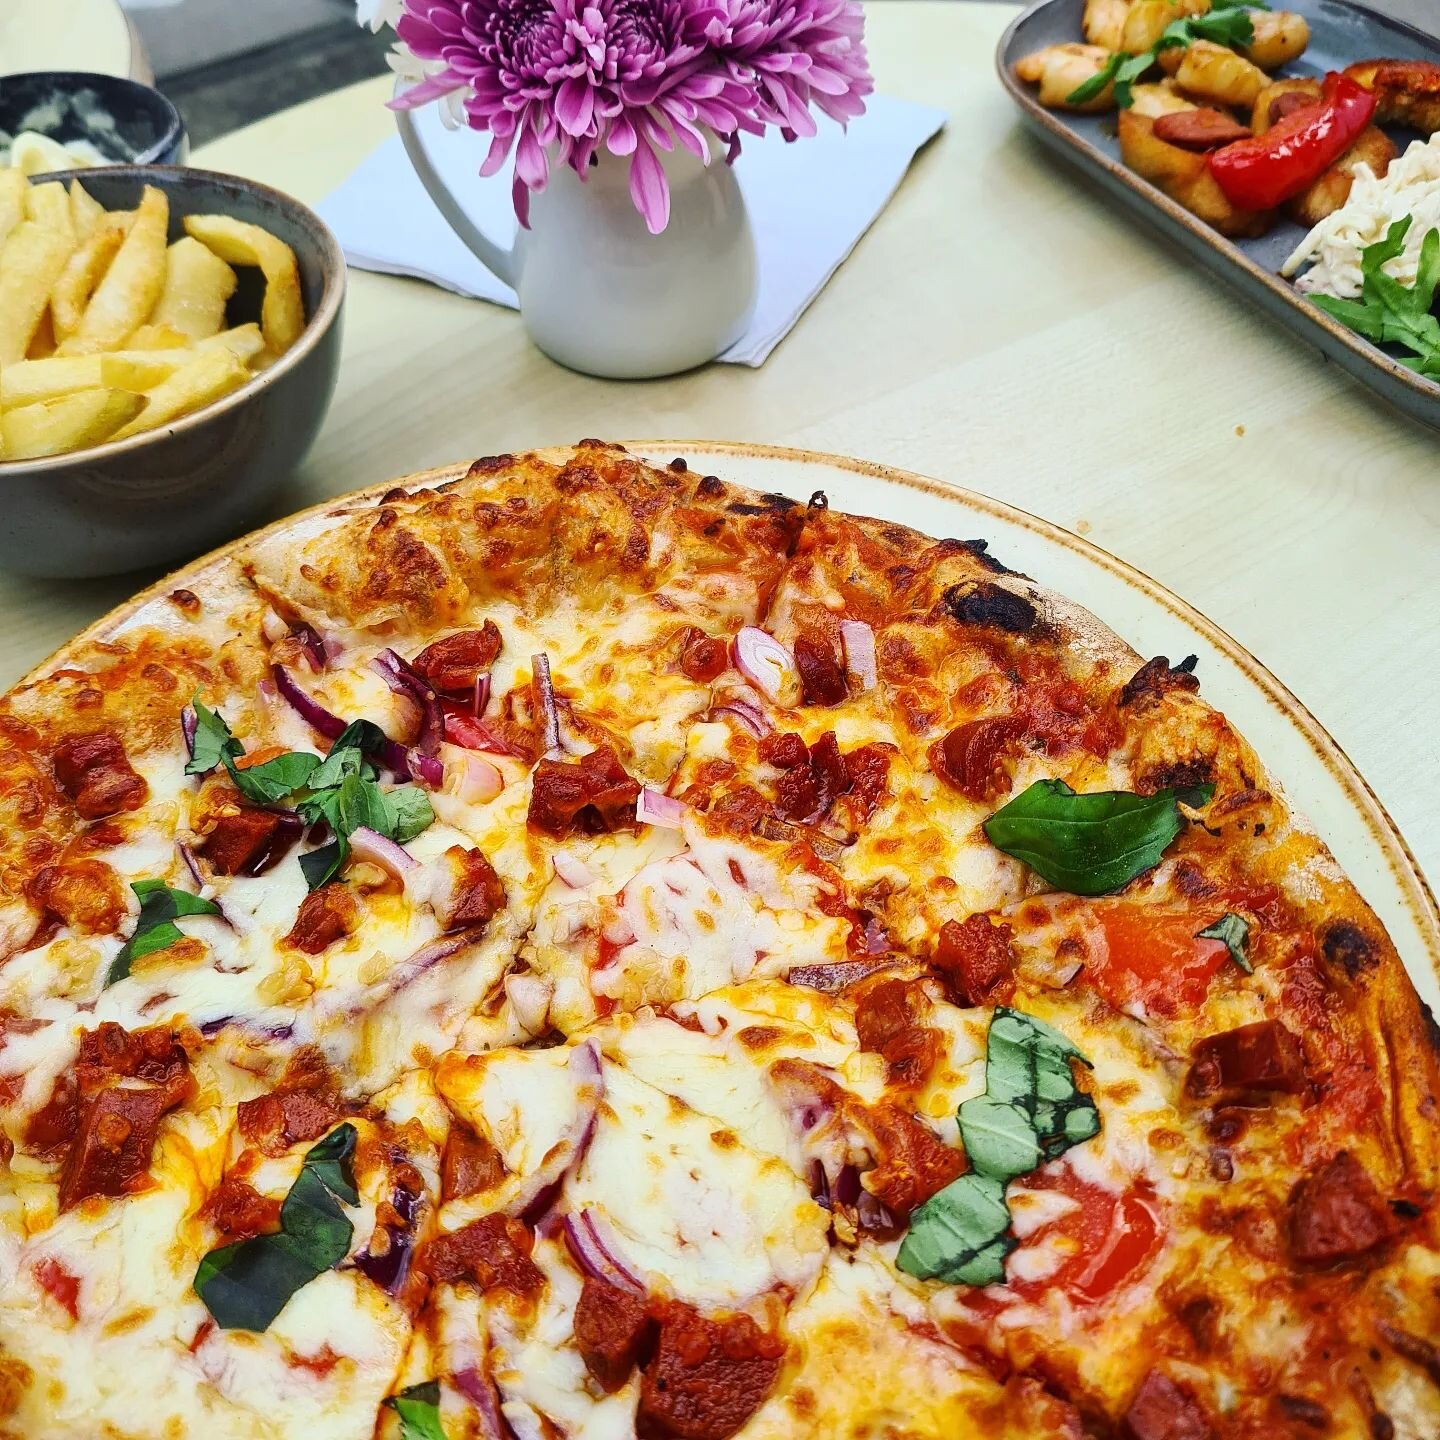 Pizza always tastes better Alfresco 😋🍕